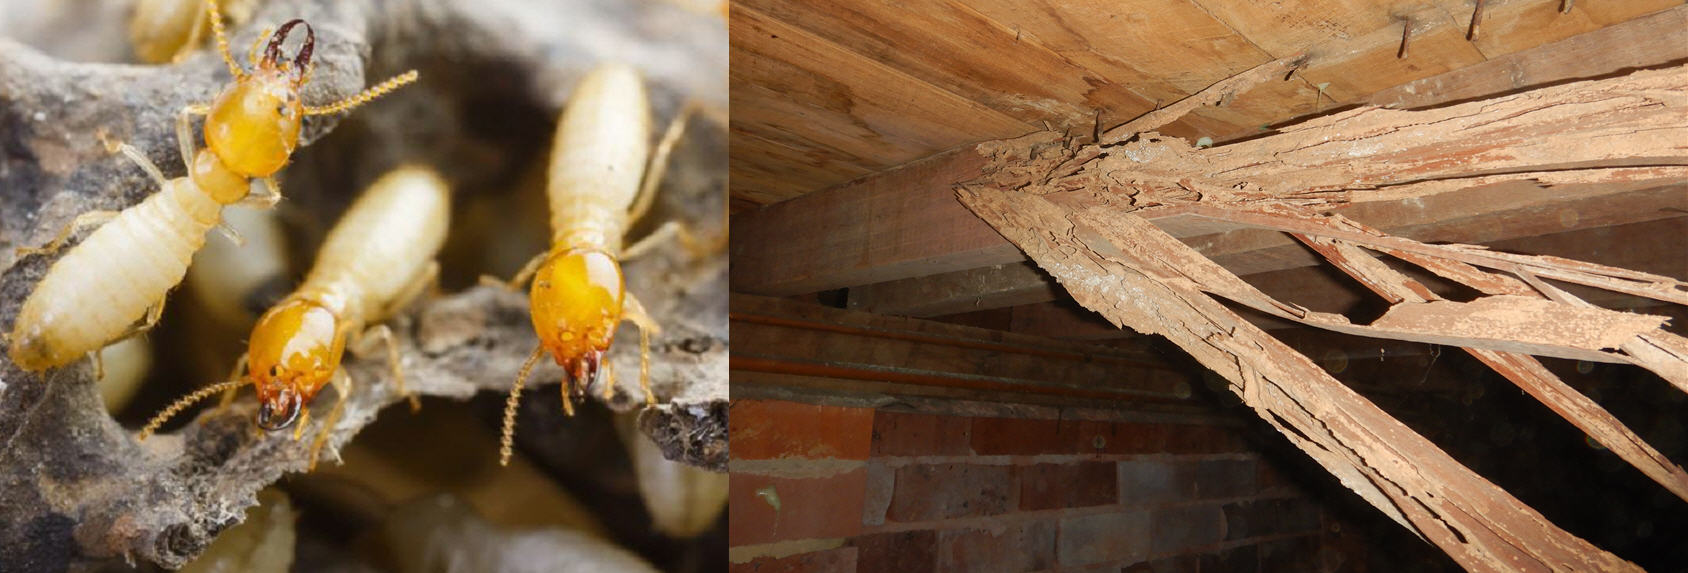 Termite pest control sydney- banner 2